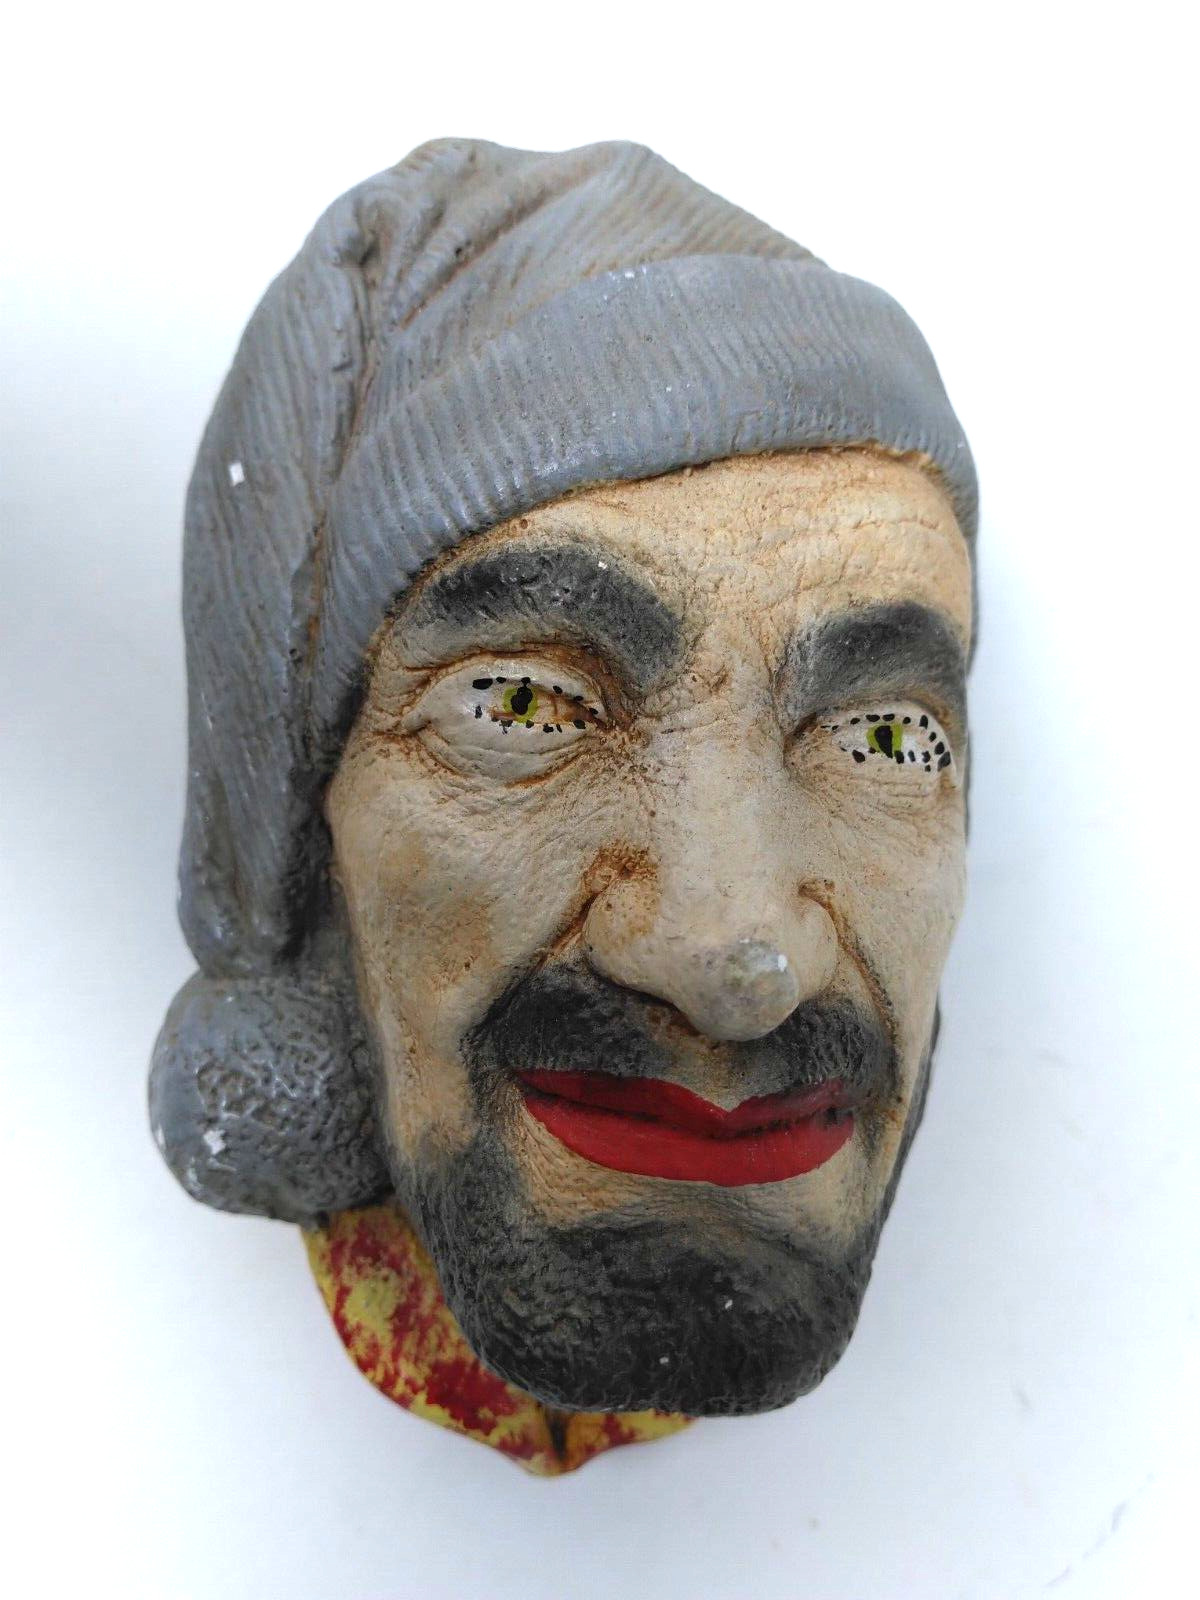 Vintage Chalkware Man/Head Kurd with Stocking Cap/ Arabian/Syrian/Logger/Eastern